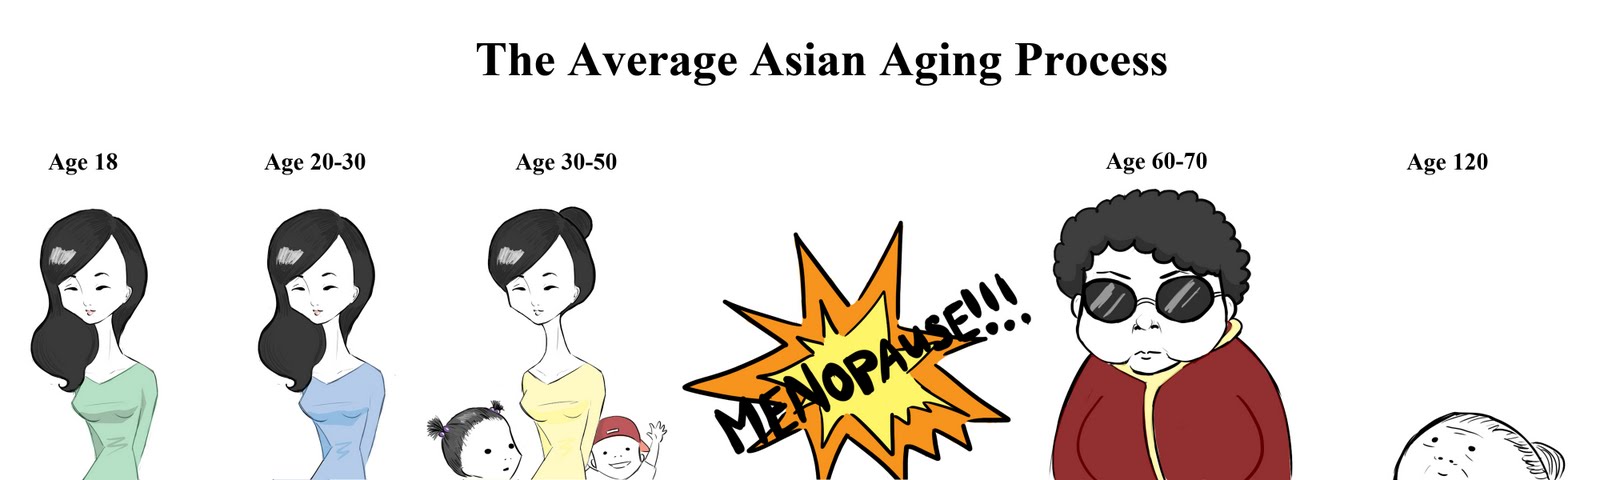 http://www.geekinheels.com/wp-content/uploads/2011/01/average_asian_woman_aging.jpg